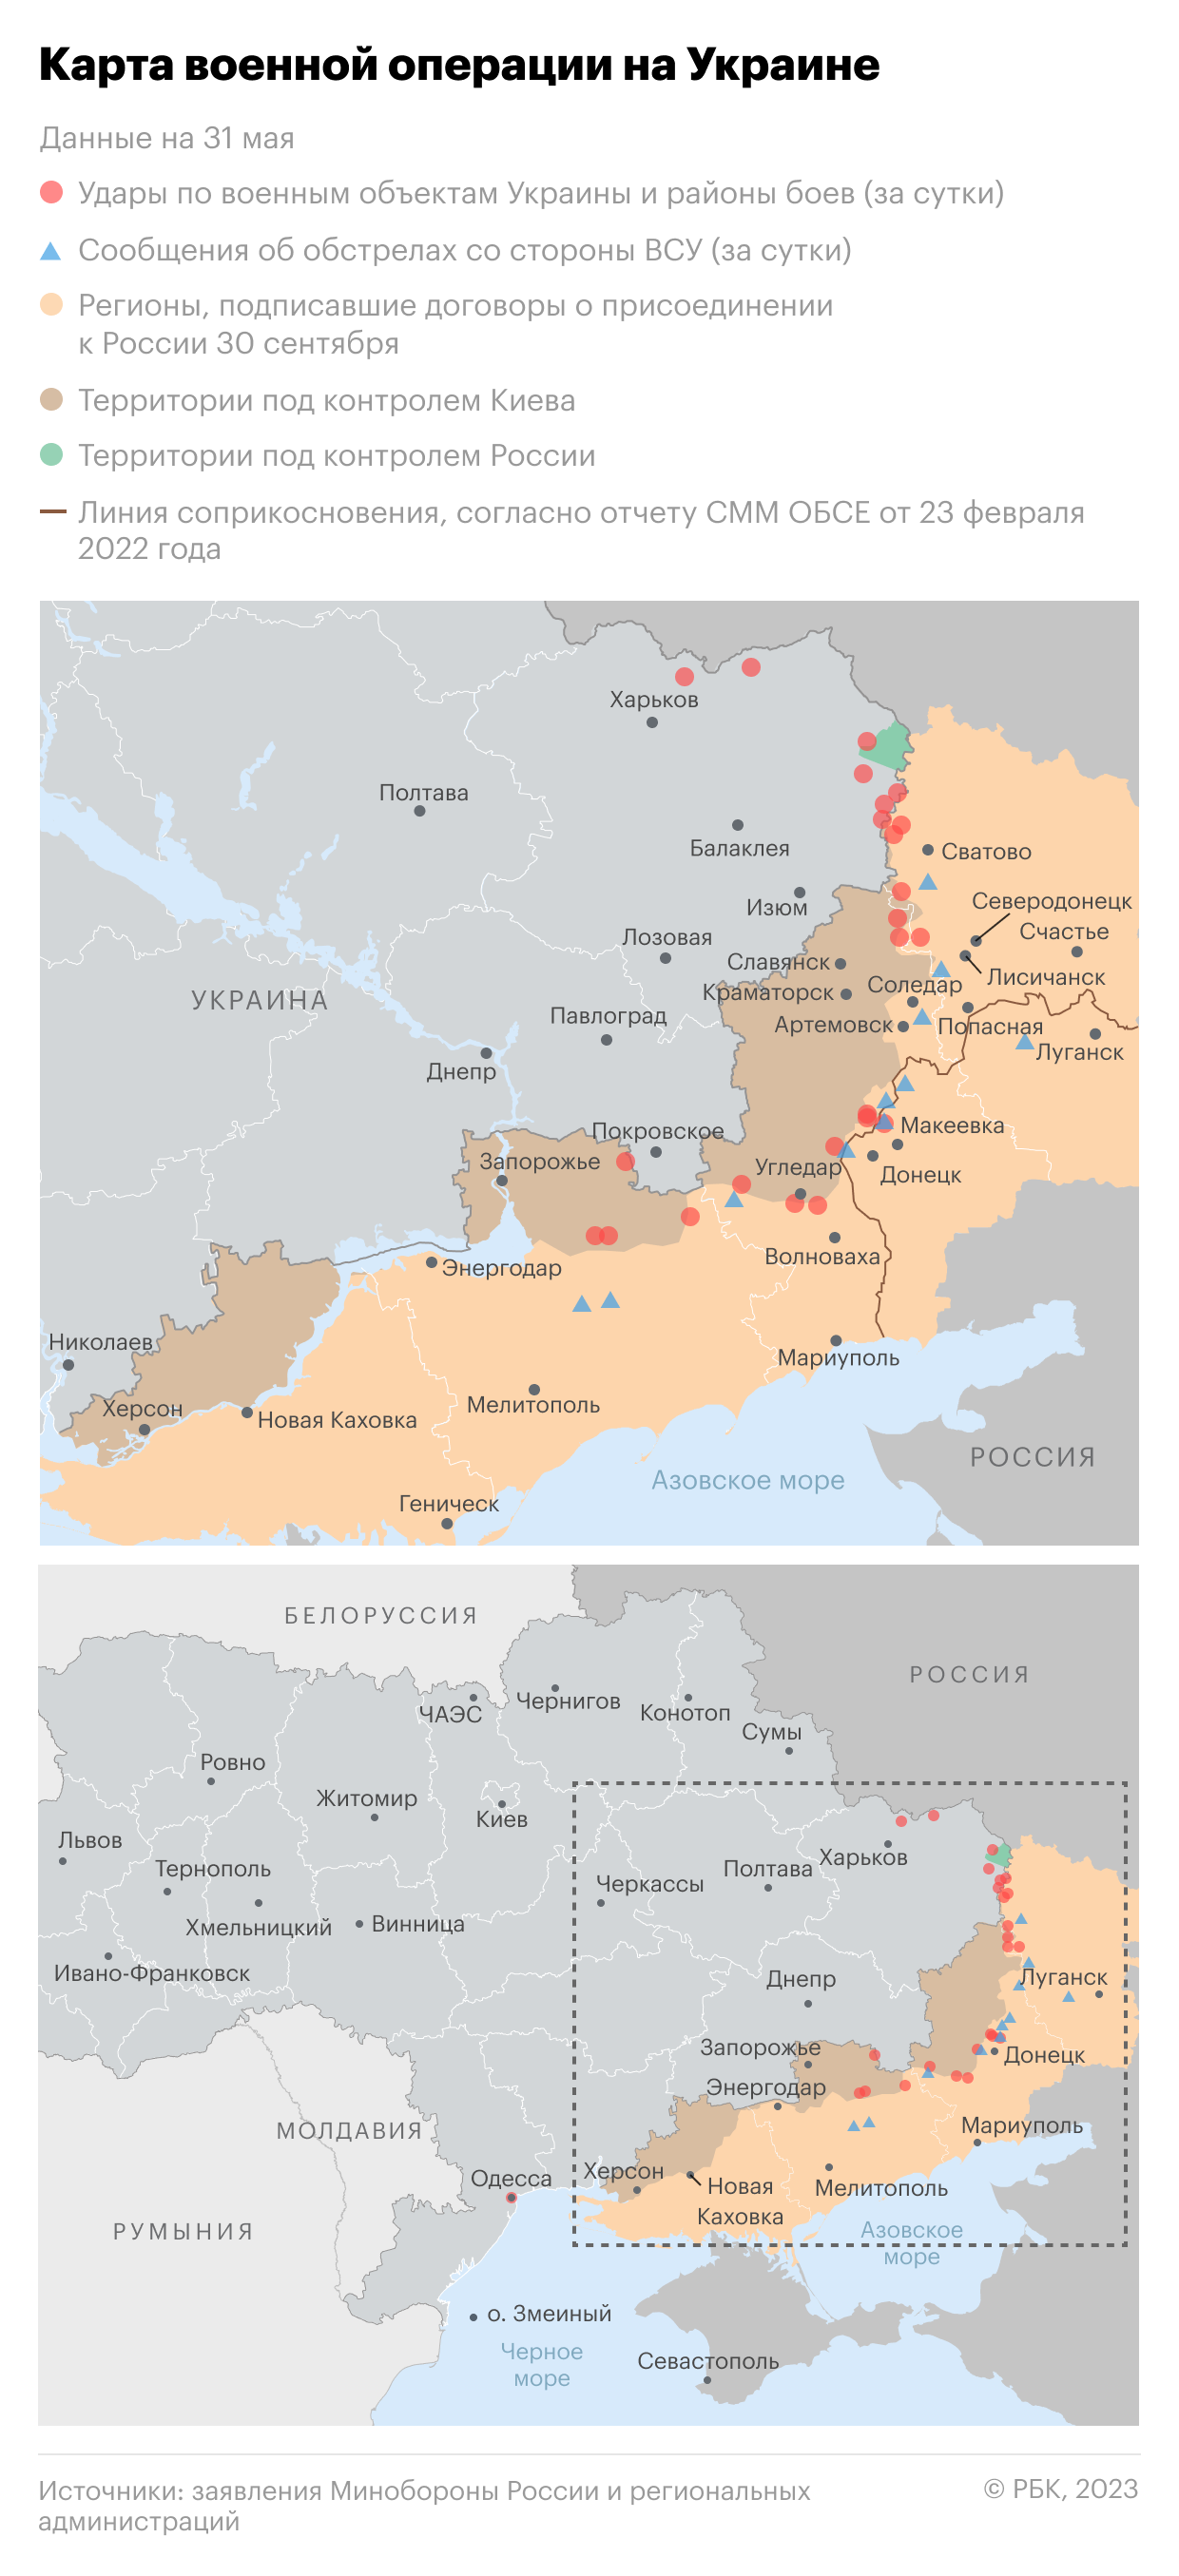 Военная операция на Украине. Карта на 31 мая